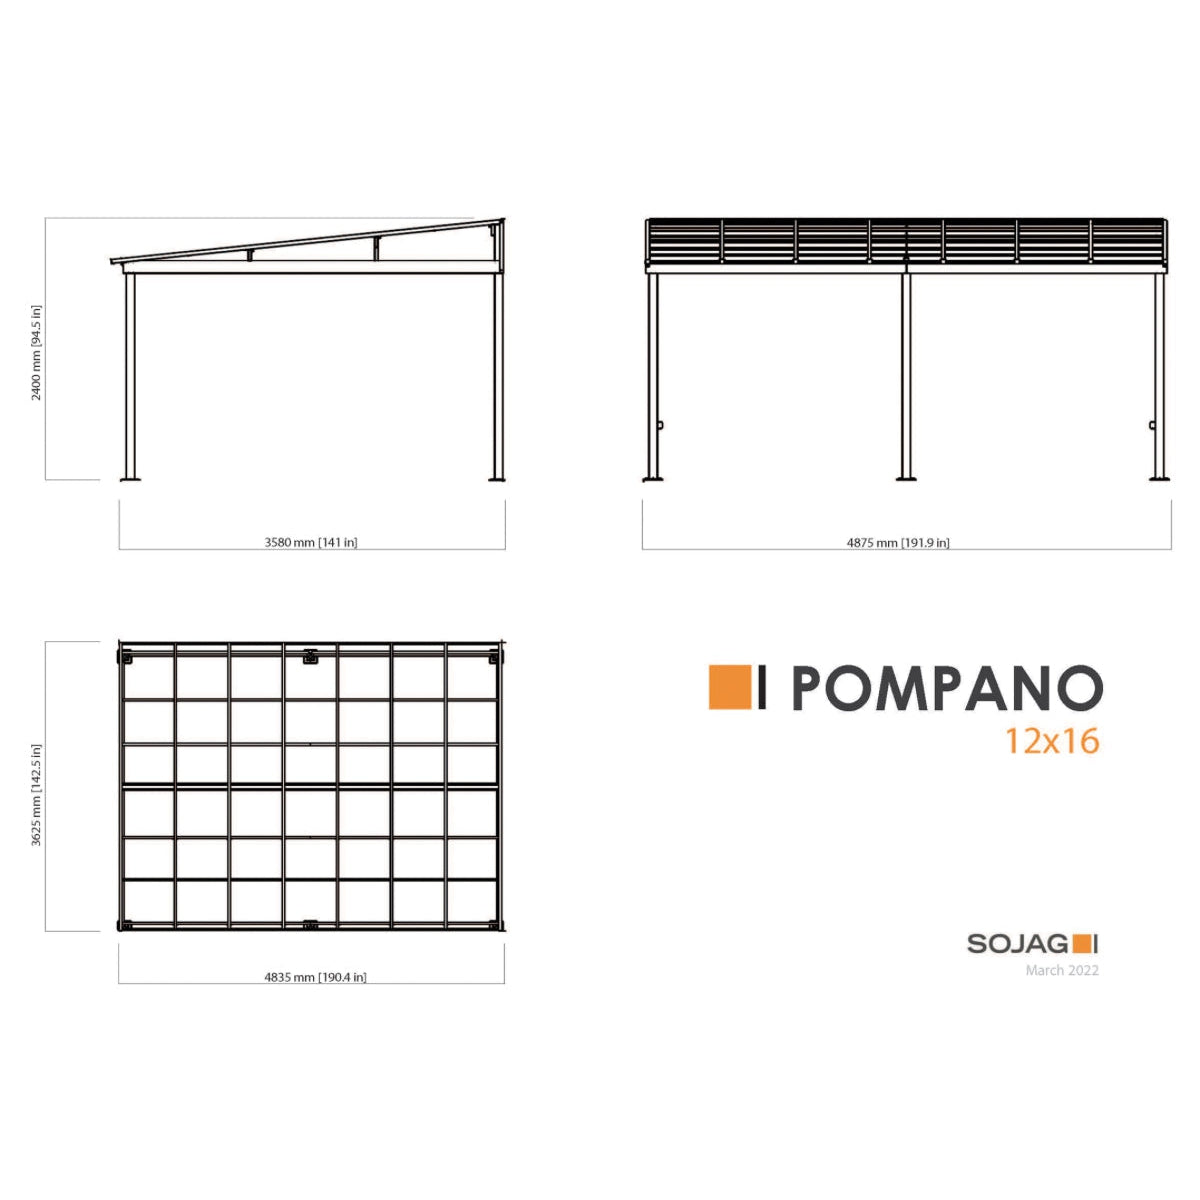 Pompano Aluminum Wall-Mounted Gazebo Patio Cover 12 x 16 ft | Sojag-Delightful Yard